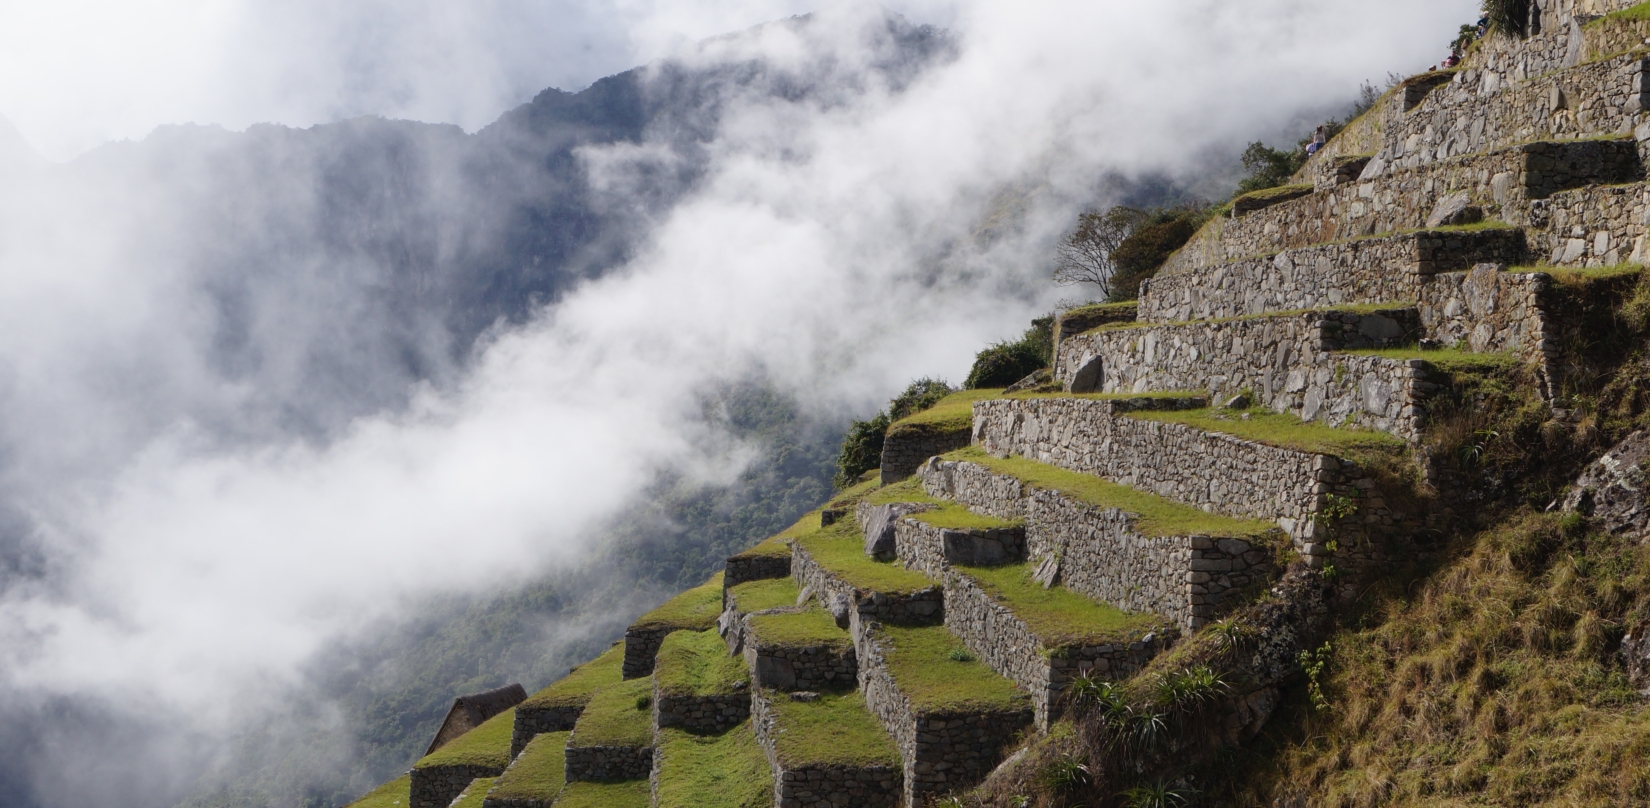 Steps at the Machu Picchu Ruins